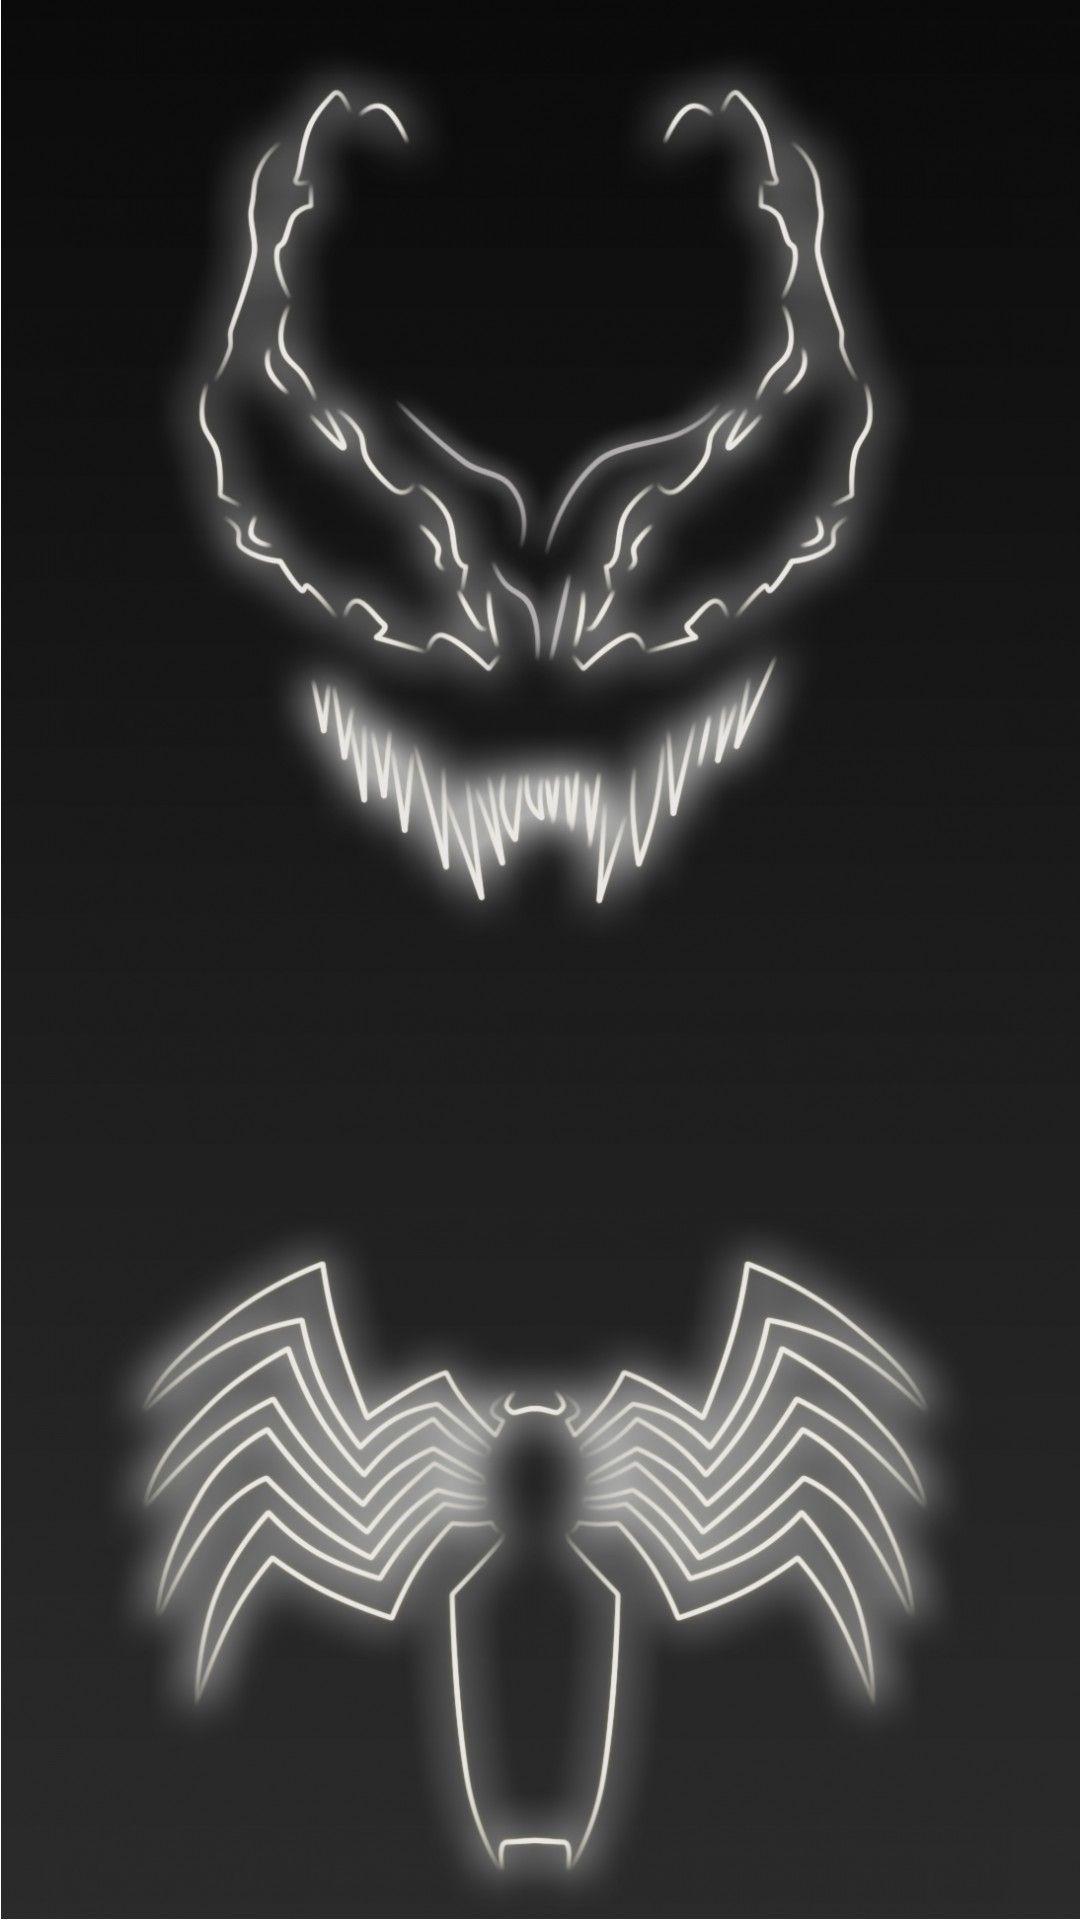 Neon Light Venom 1080 x 1920 Wallpaper disponible en